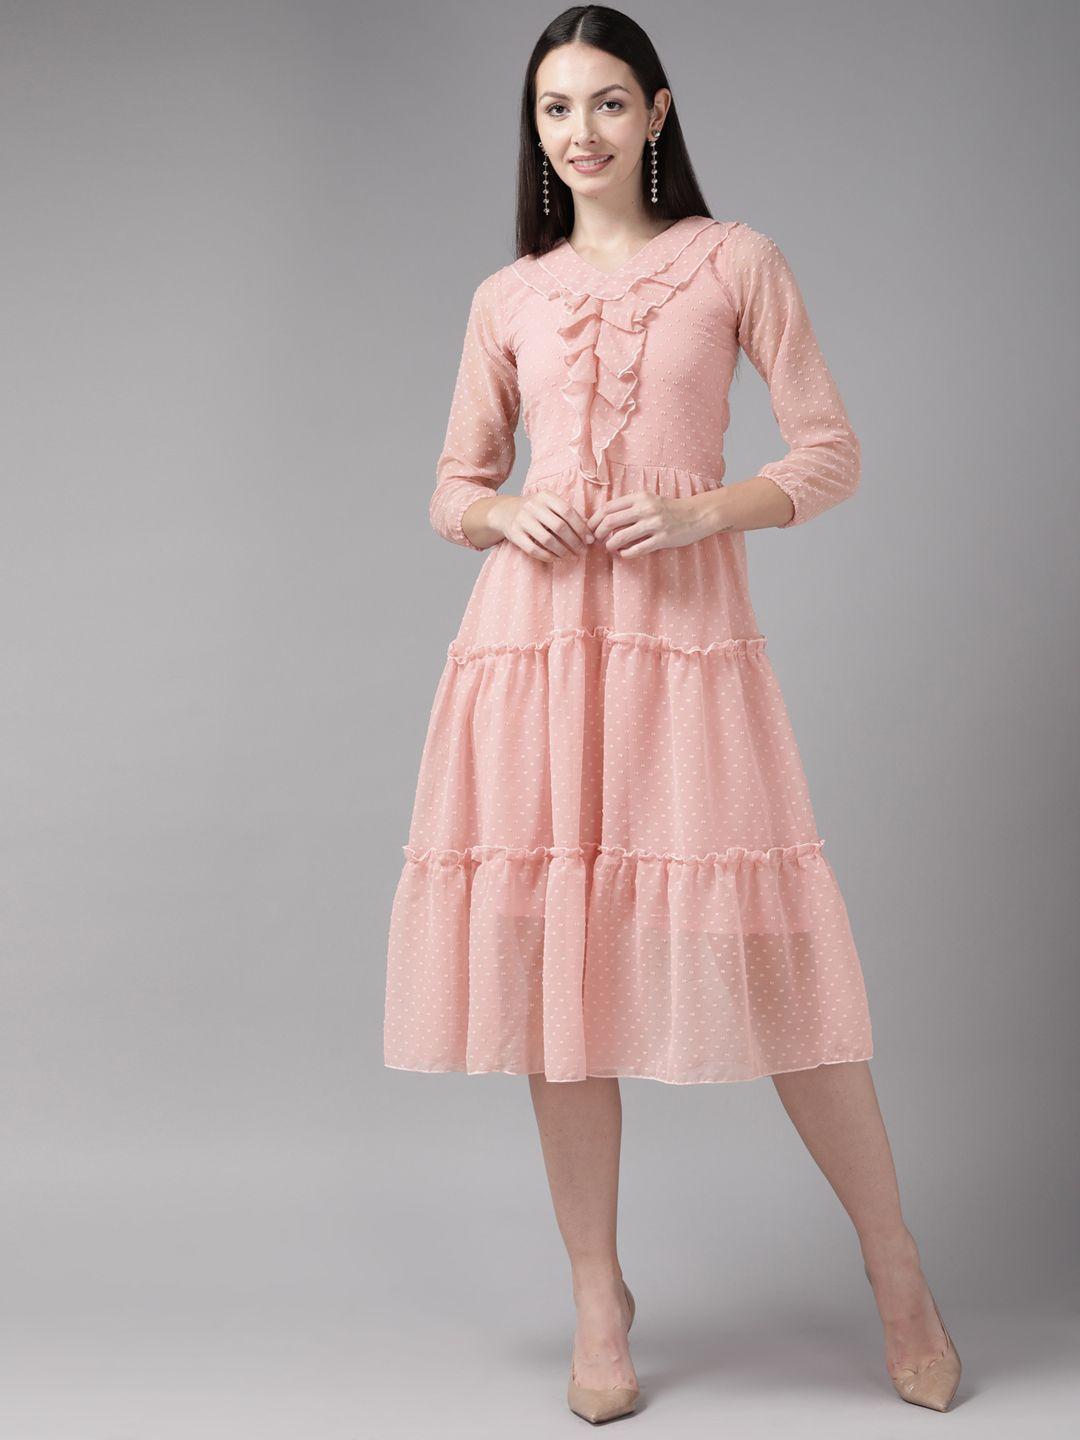 aarika-peach-coloured-georgette-a-line-dress